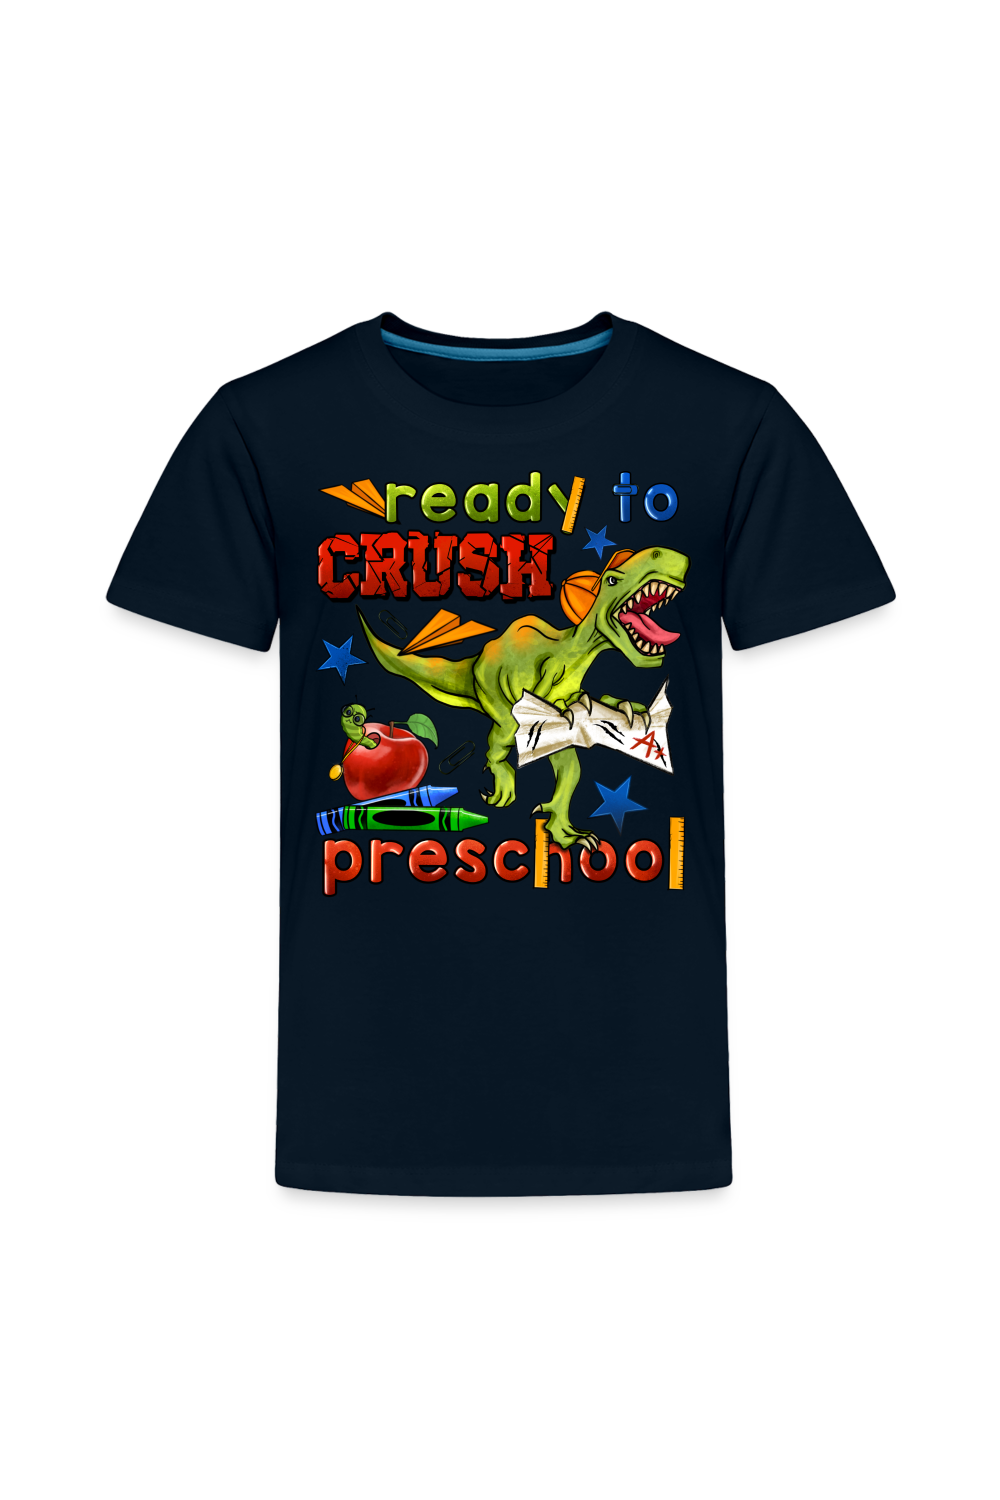 Toddler Boys Ready To Crush Preschool Short Sleeve Tee Shirt for Back To School - deep navy